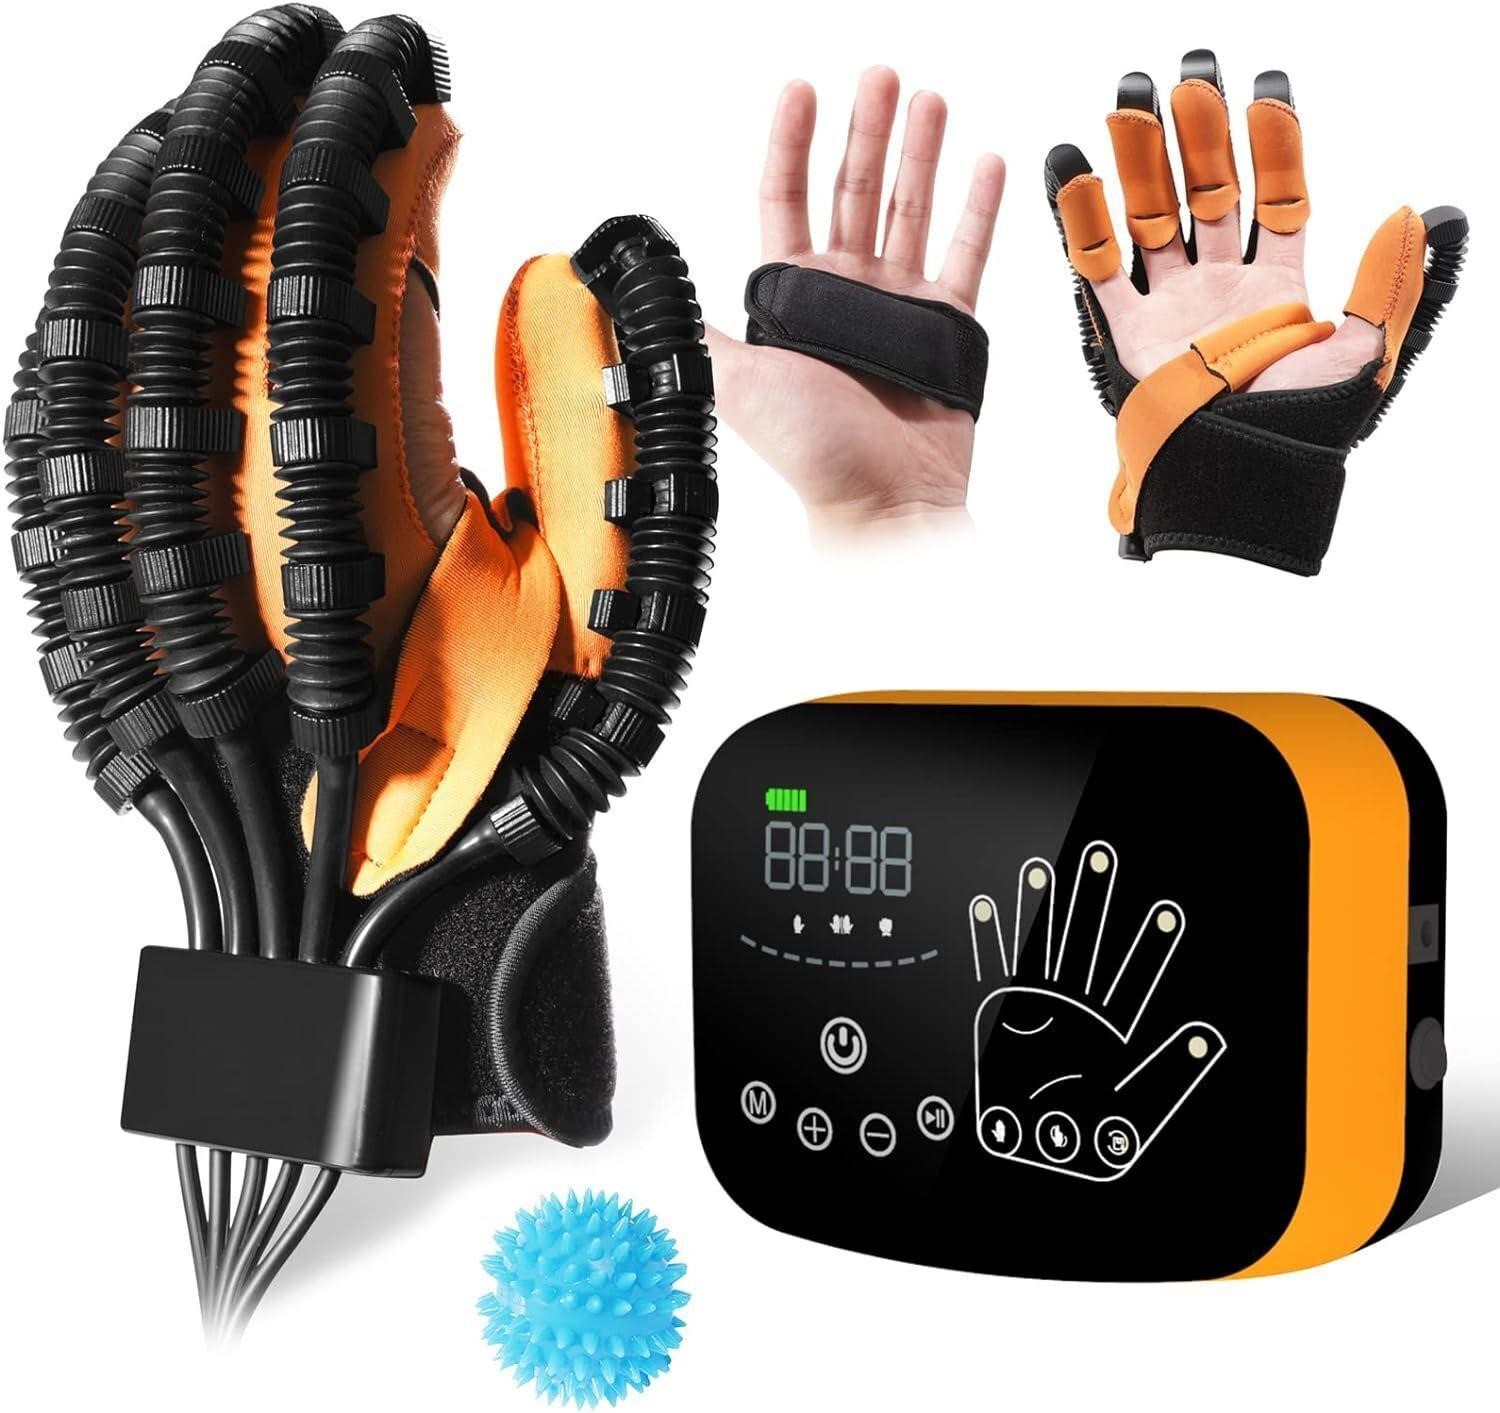 Rehabilitation robotic gloves